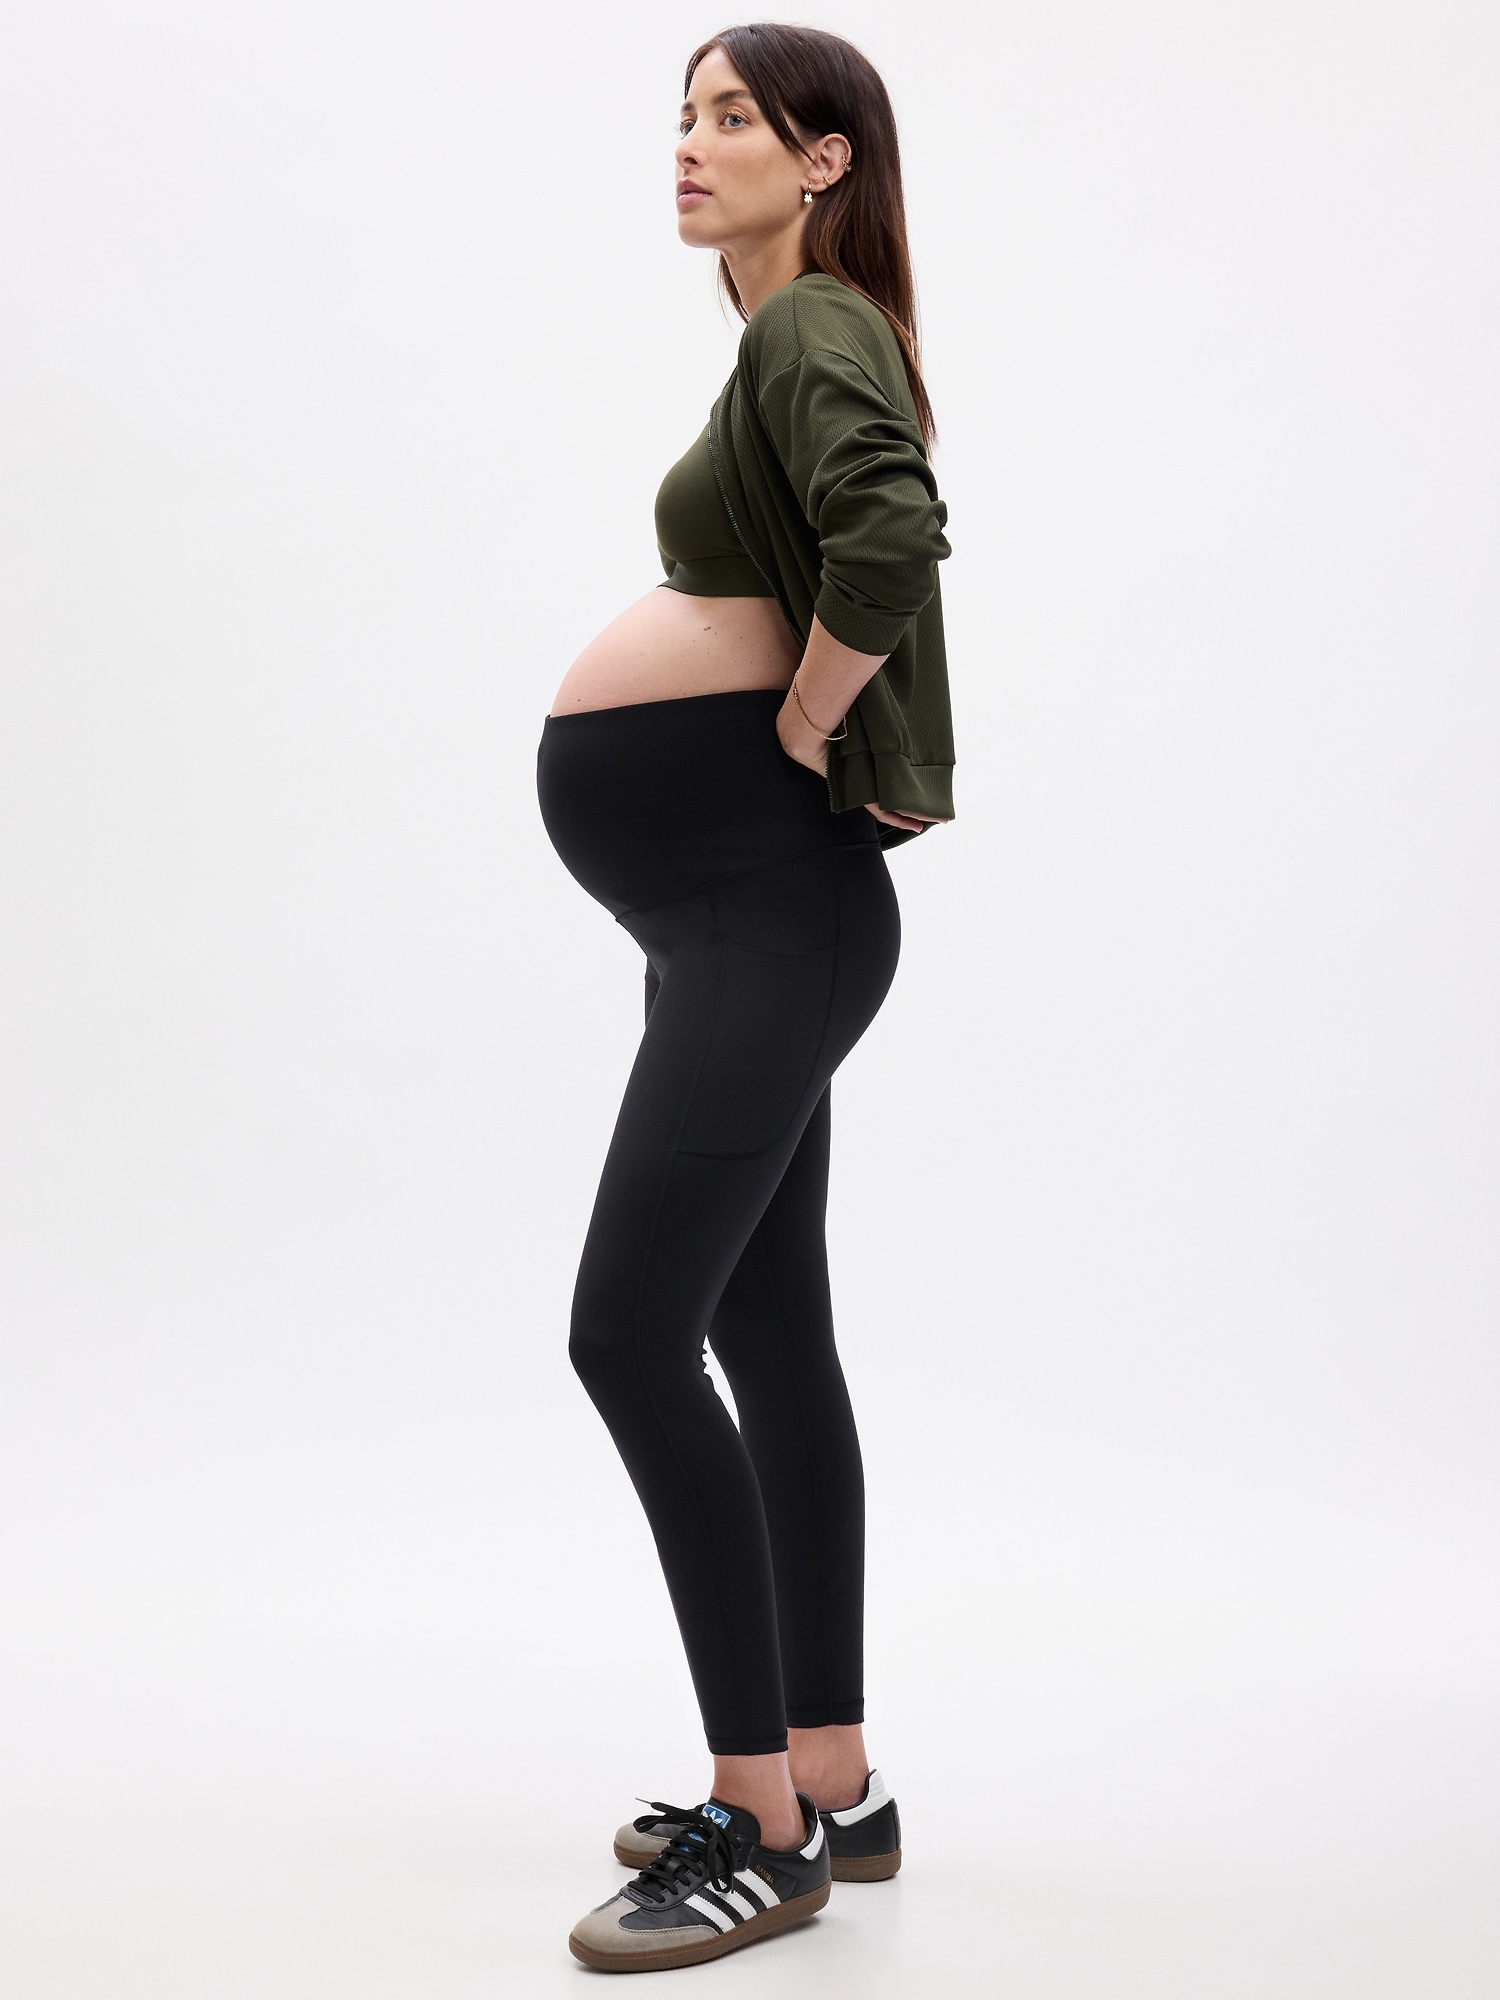 Gap  Gap maternity, Gap fit, Maternity fashion